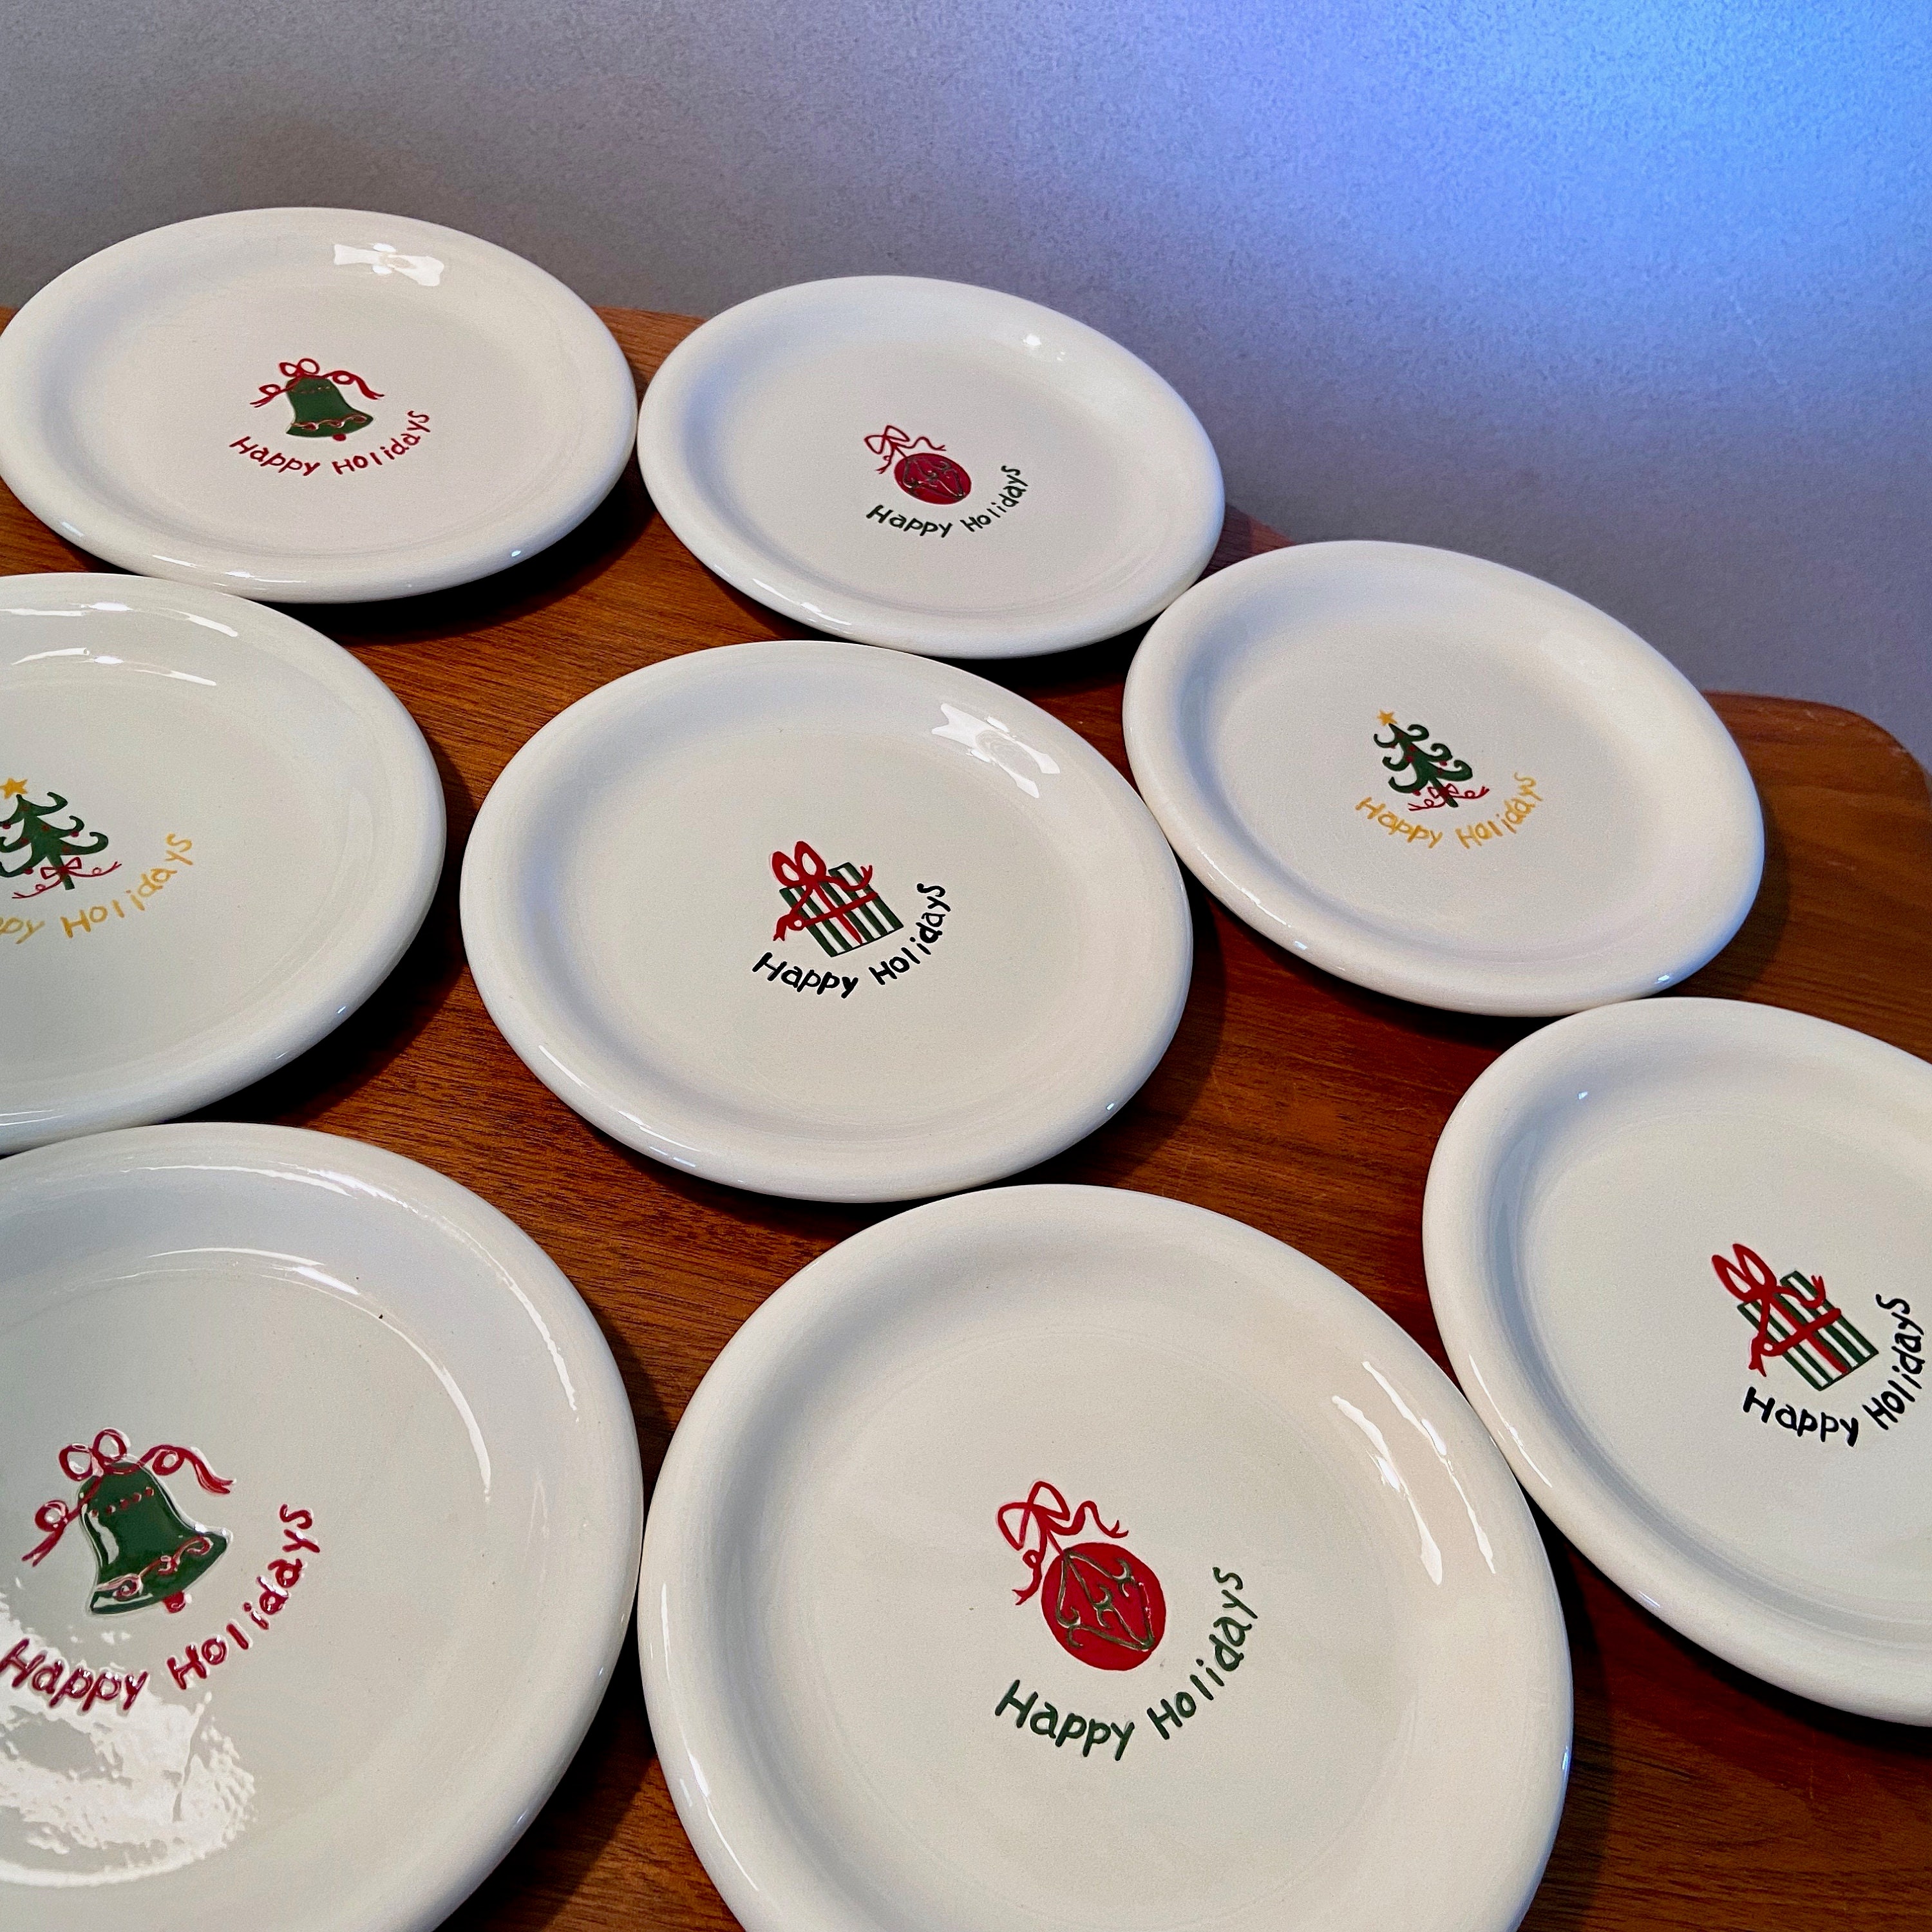 Erya Porcelain Dinnerware Party of 6 Appetizer Plates White 5.5 